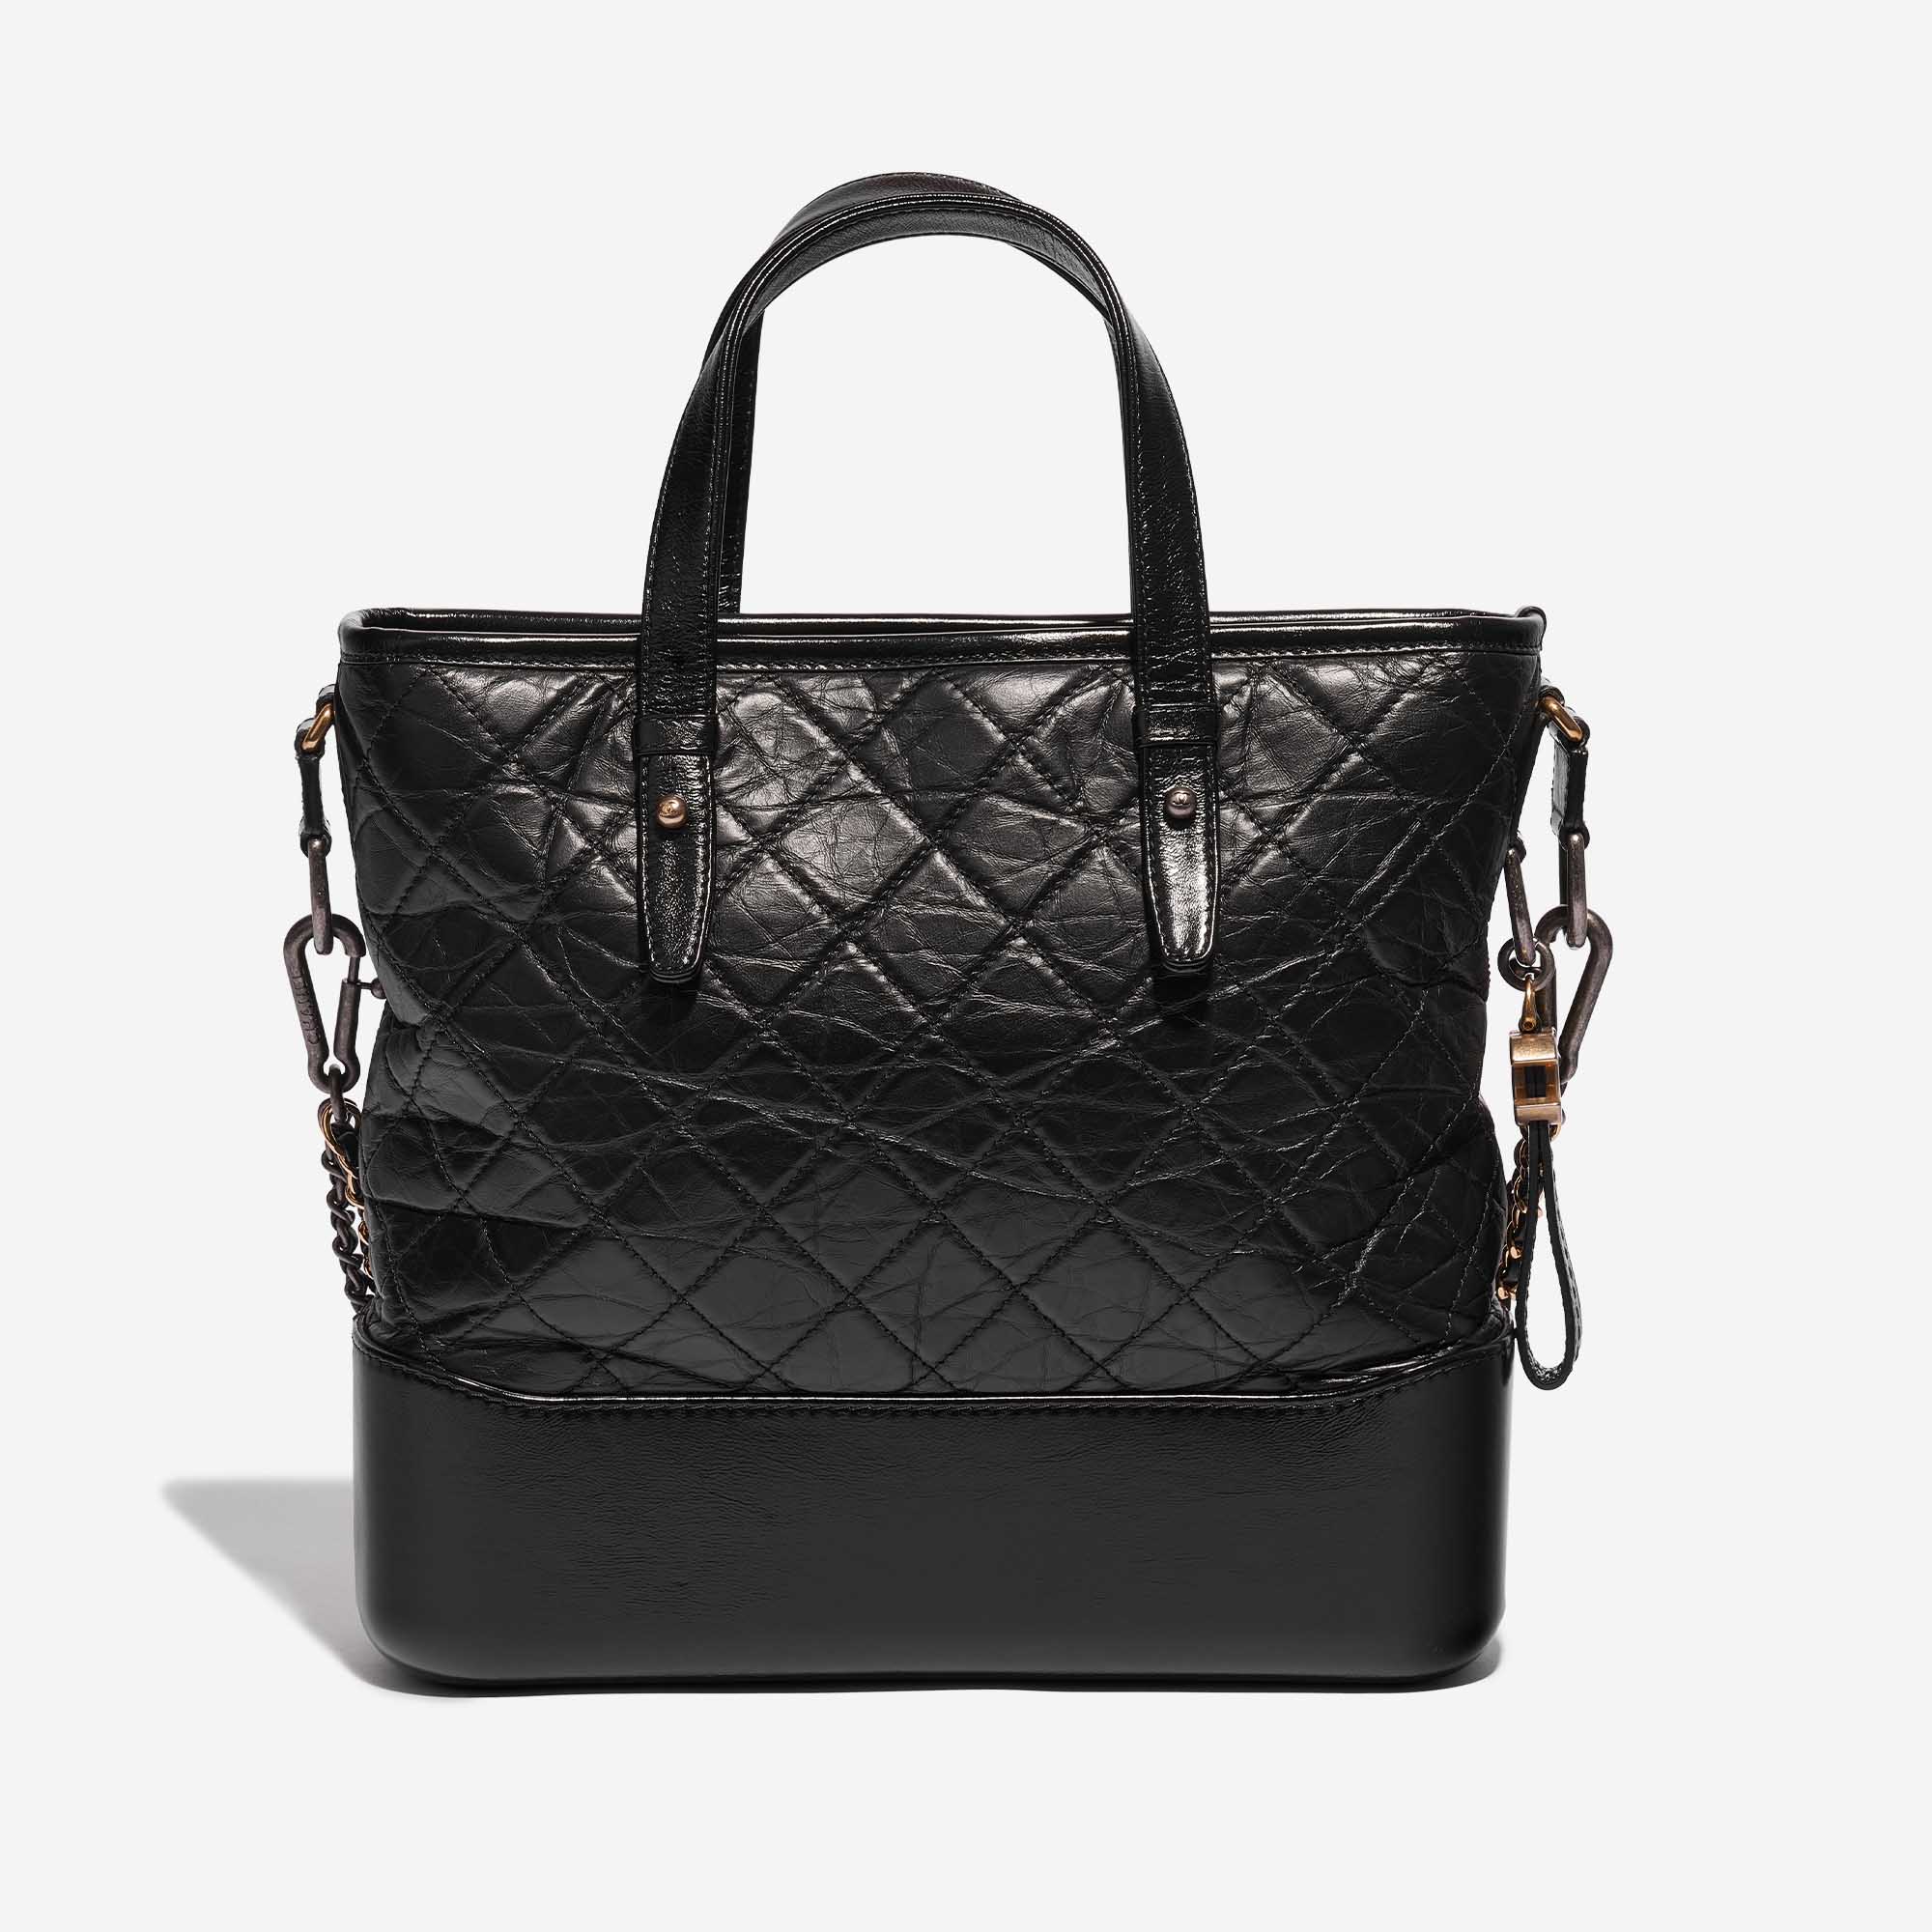 Pre-owned Chanel bag Gabrielle Medium Calf Black Black Back | Sell your designer bag on Saclab.com